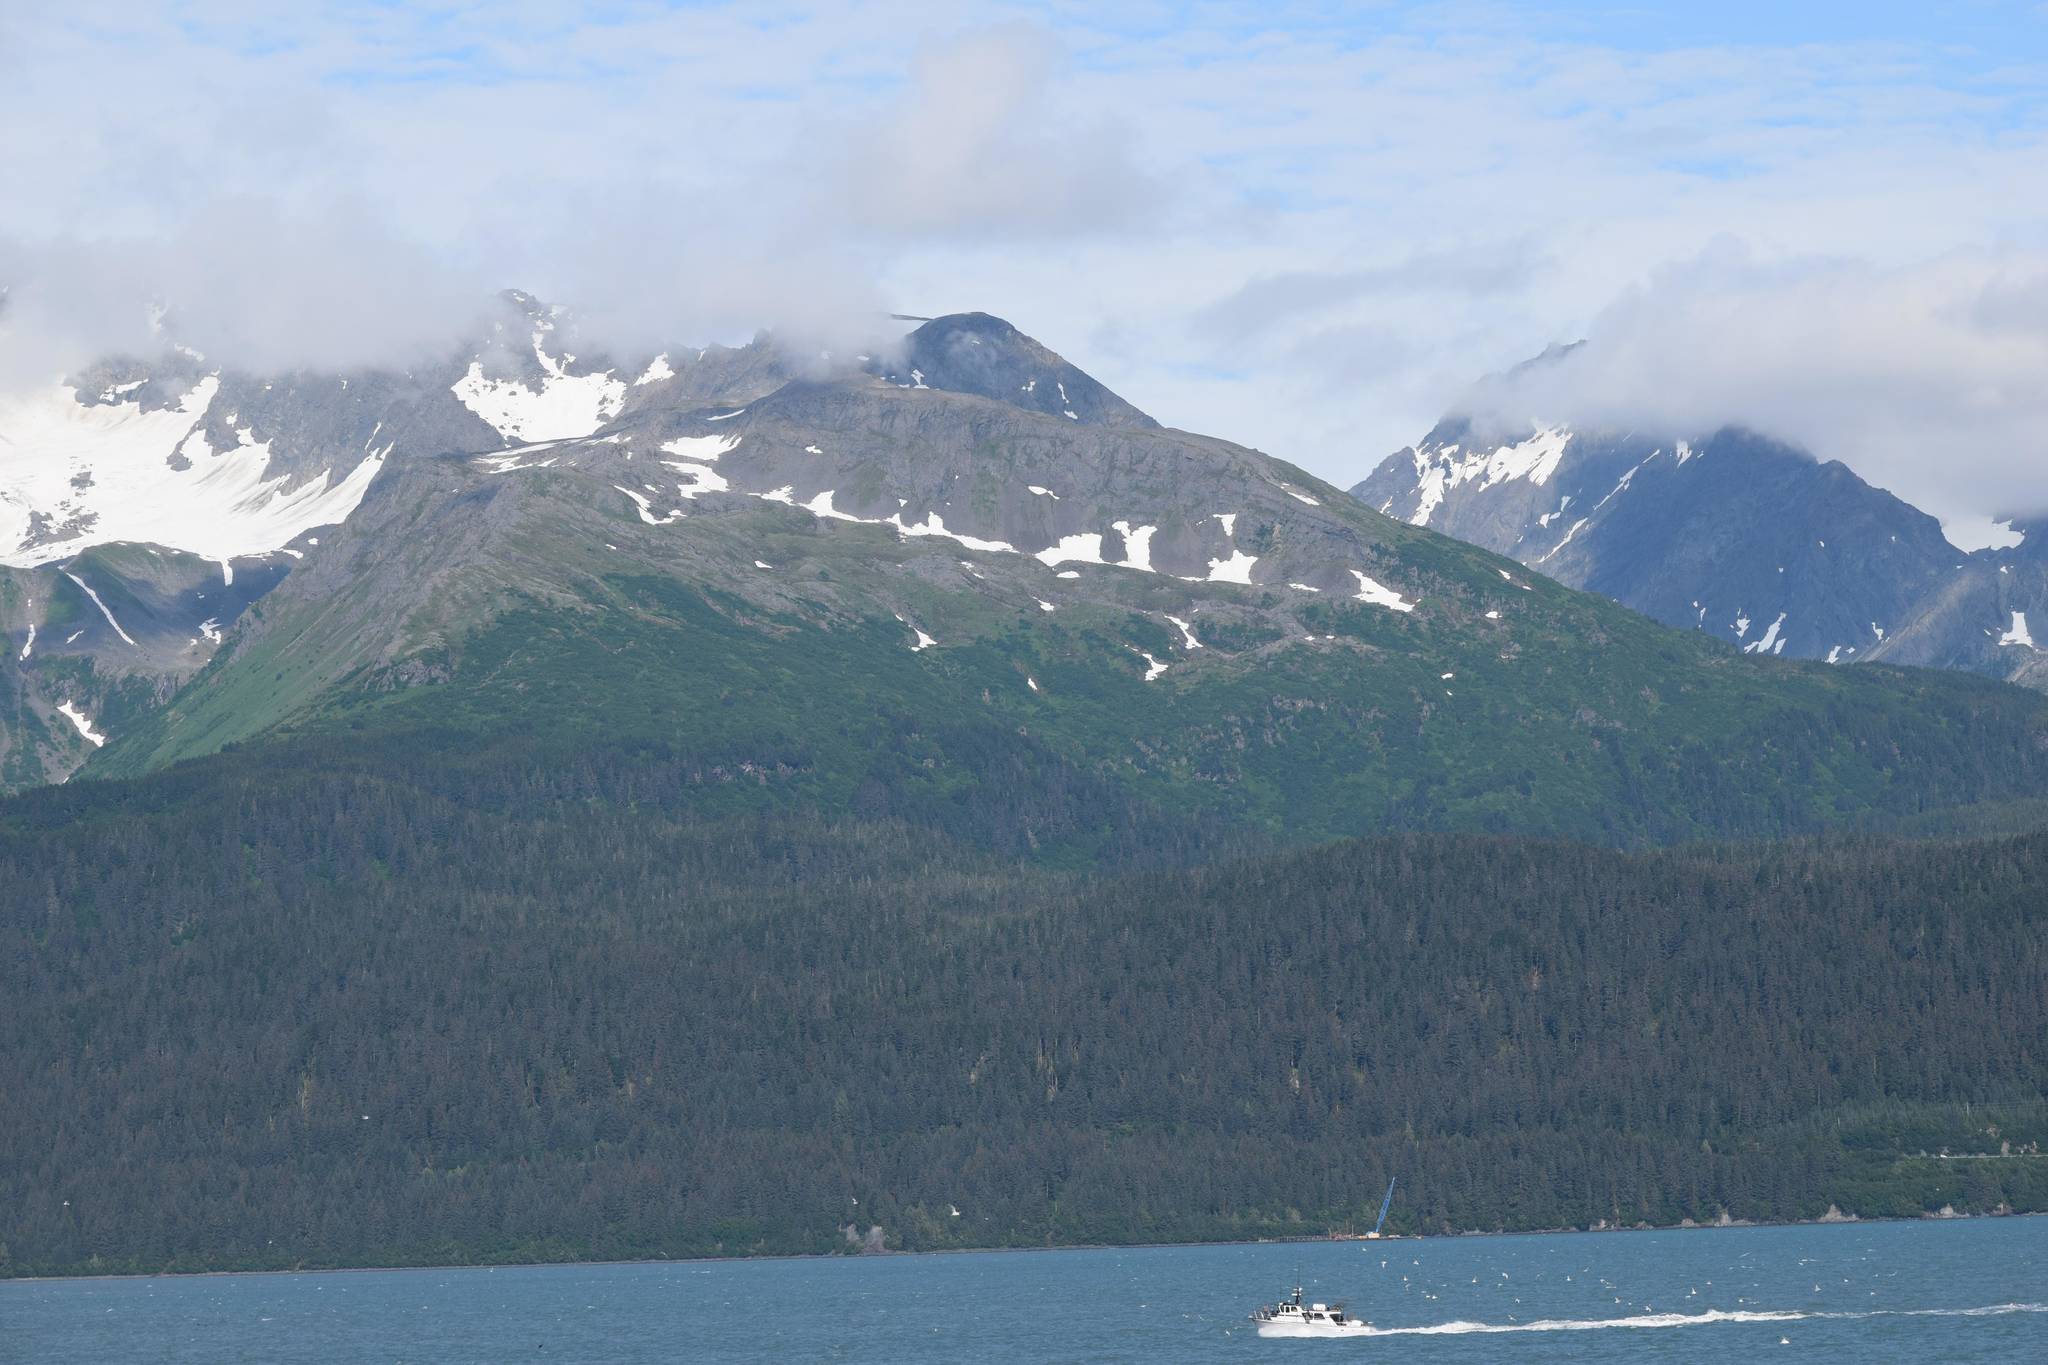 Resurrection Bay is seen from Seward, Alaska on Saturday, July 24, 2021. (Camille Botello / Peninsula Clarion)